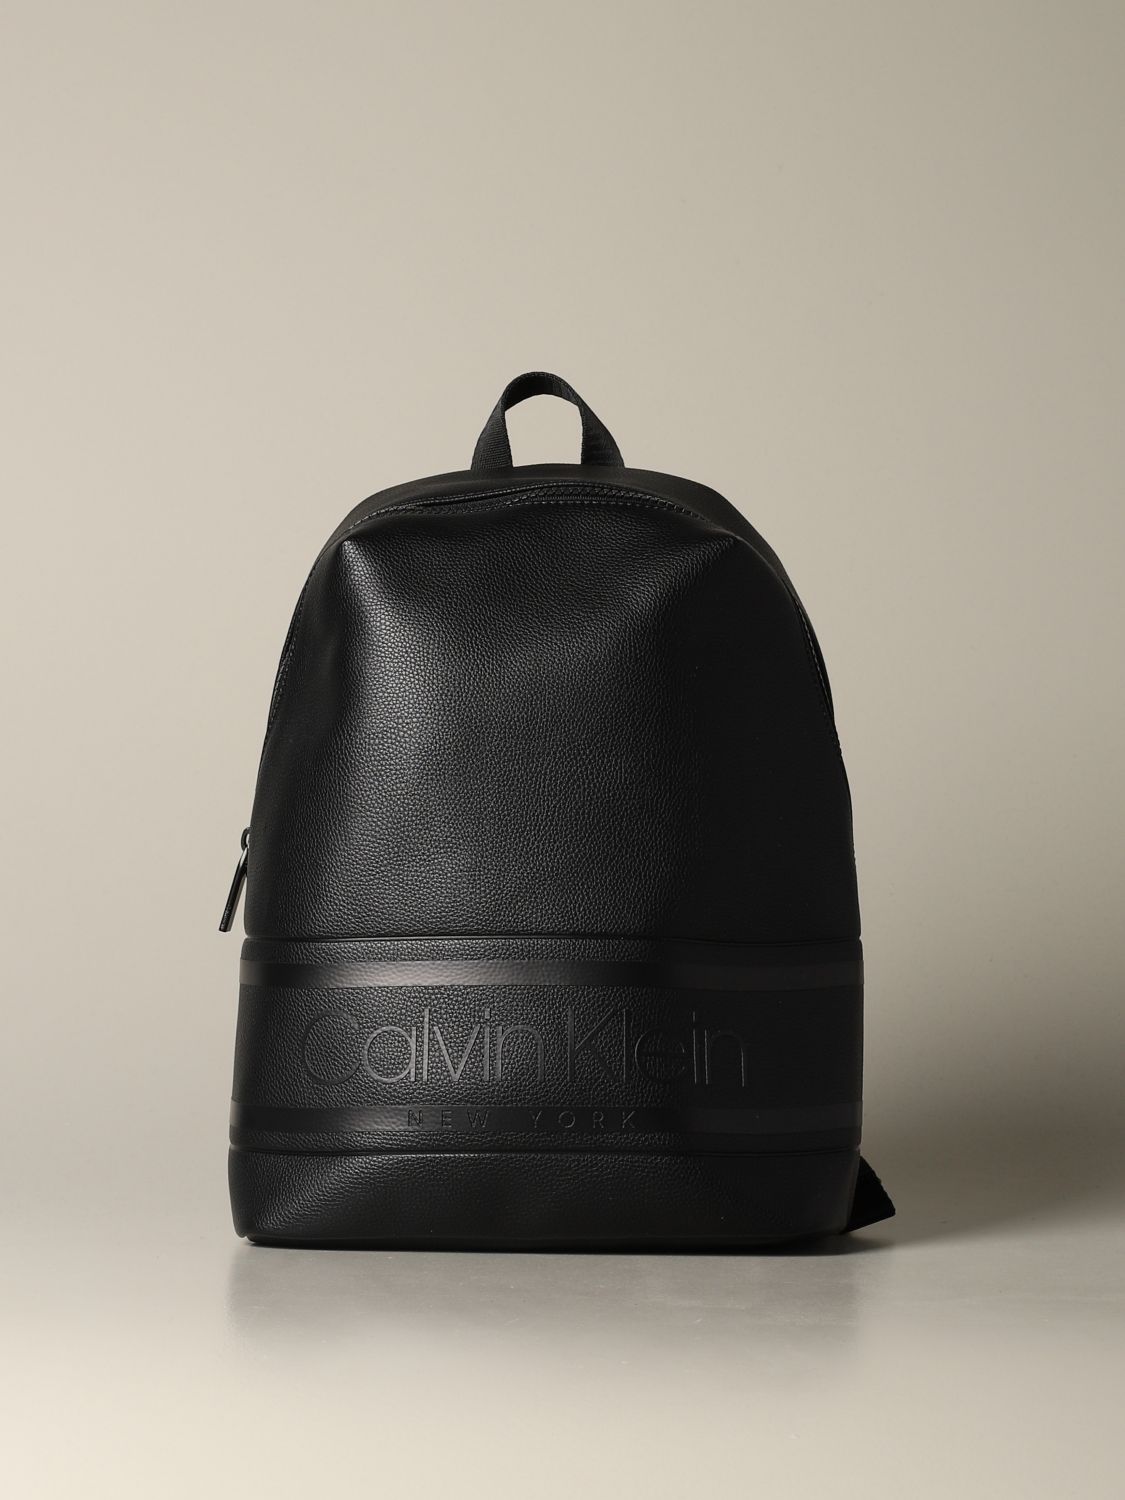 Opvoeding Mijnenveld Faial Calvin Klein Outlet: backpack for man - Black | Calvin Klein backpack  K50K505647 online on GIGLIO.COM